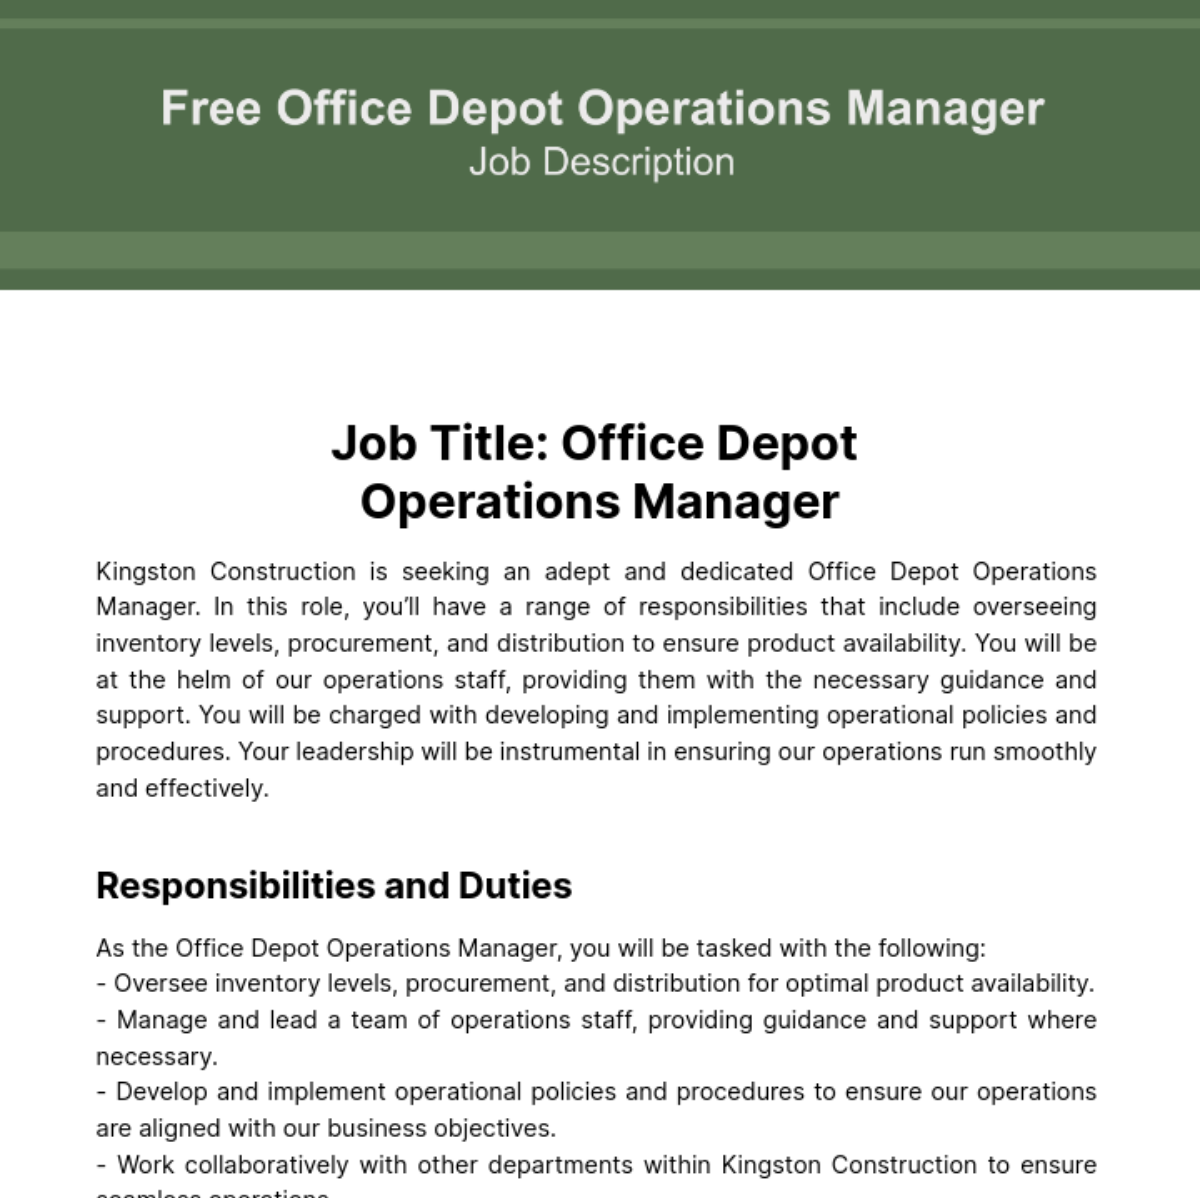 Free Office Depot Operations Manager Job Description Template